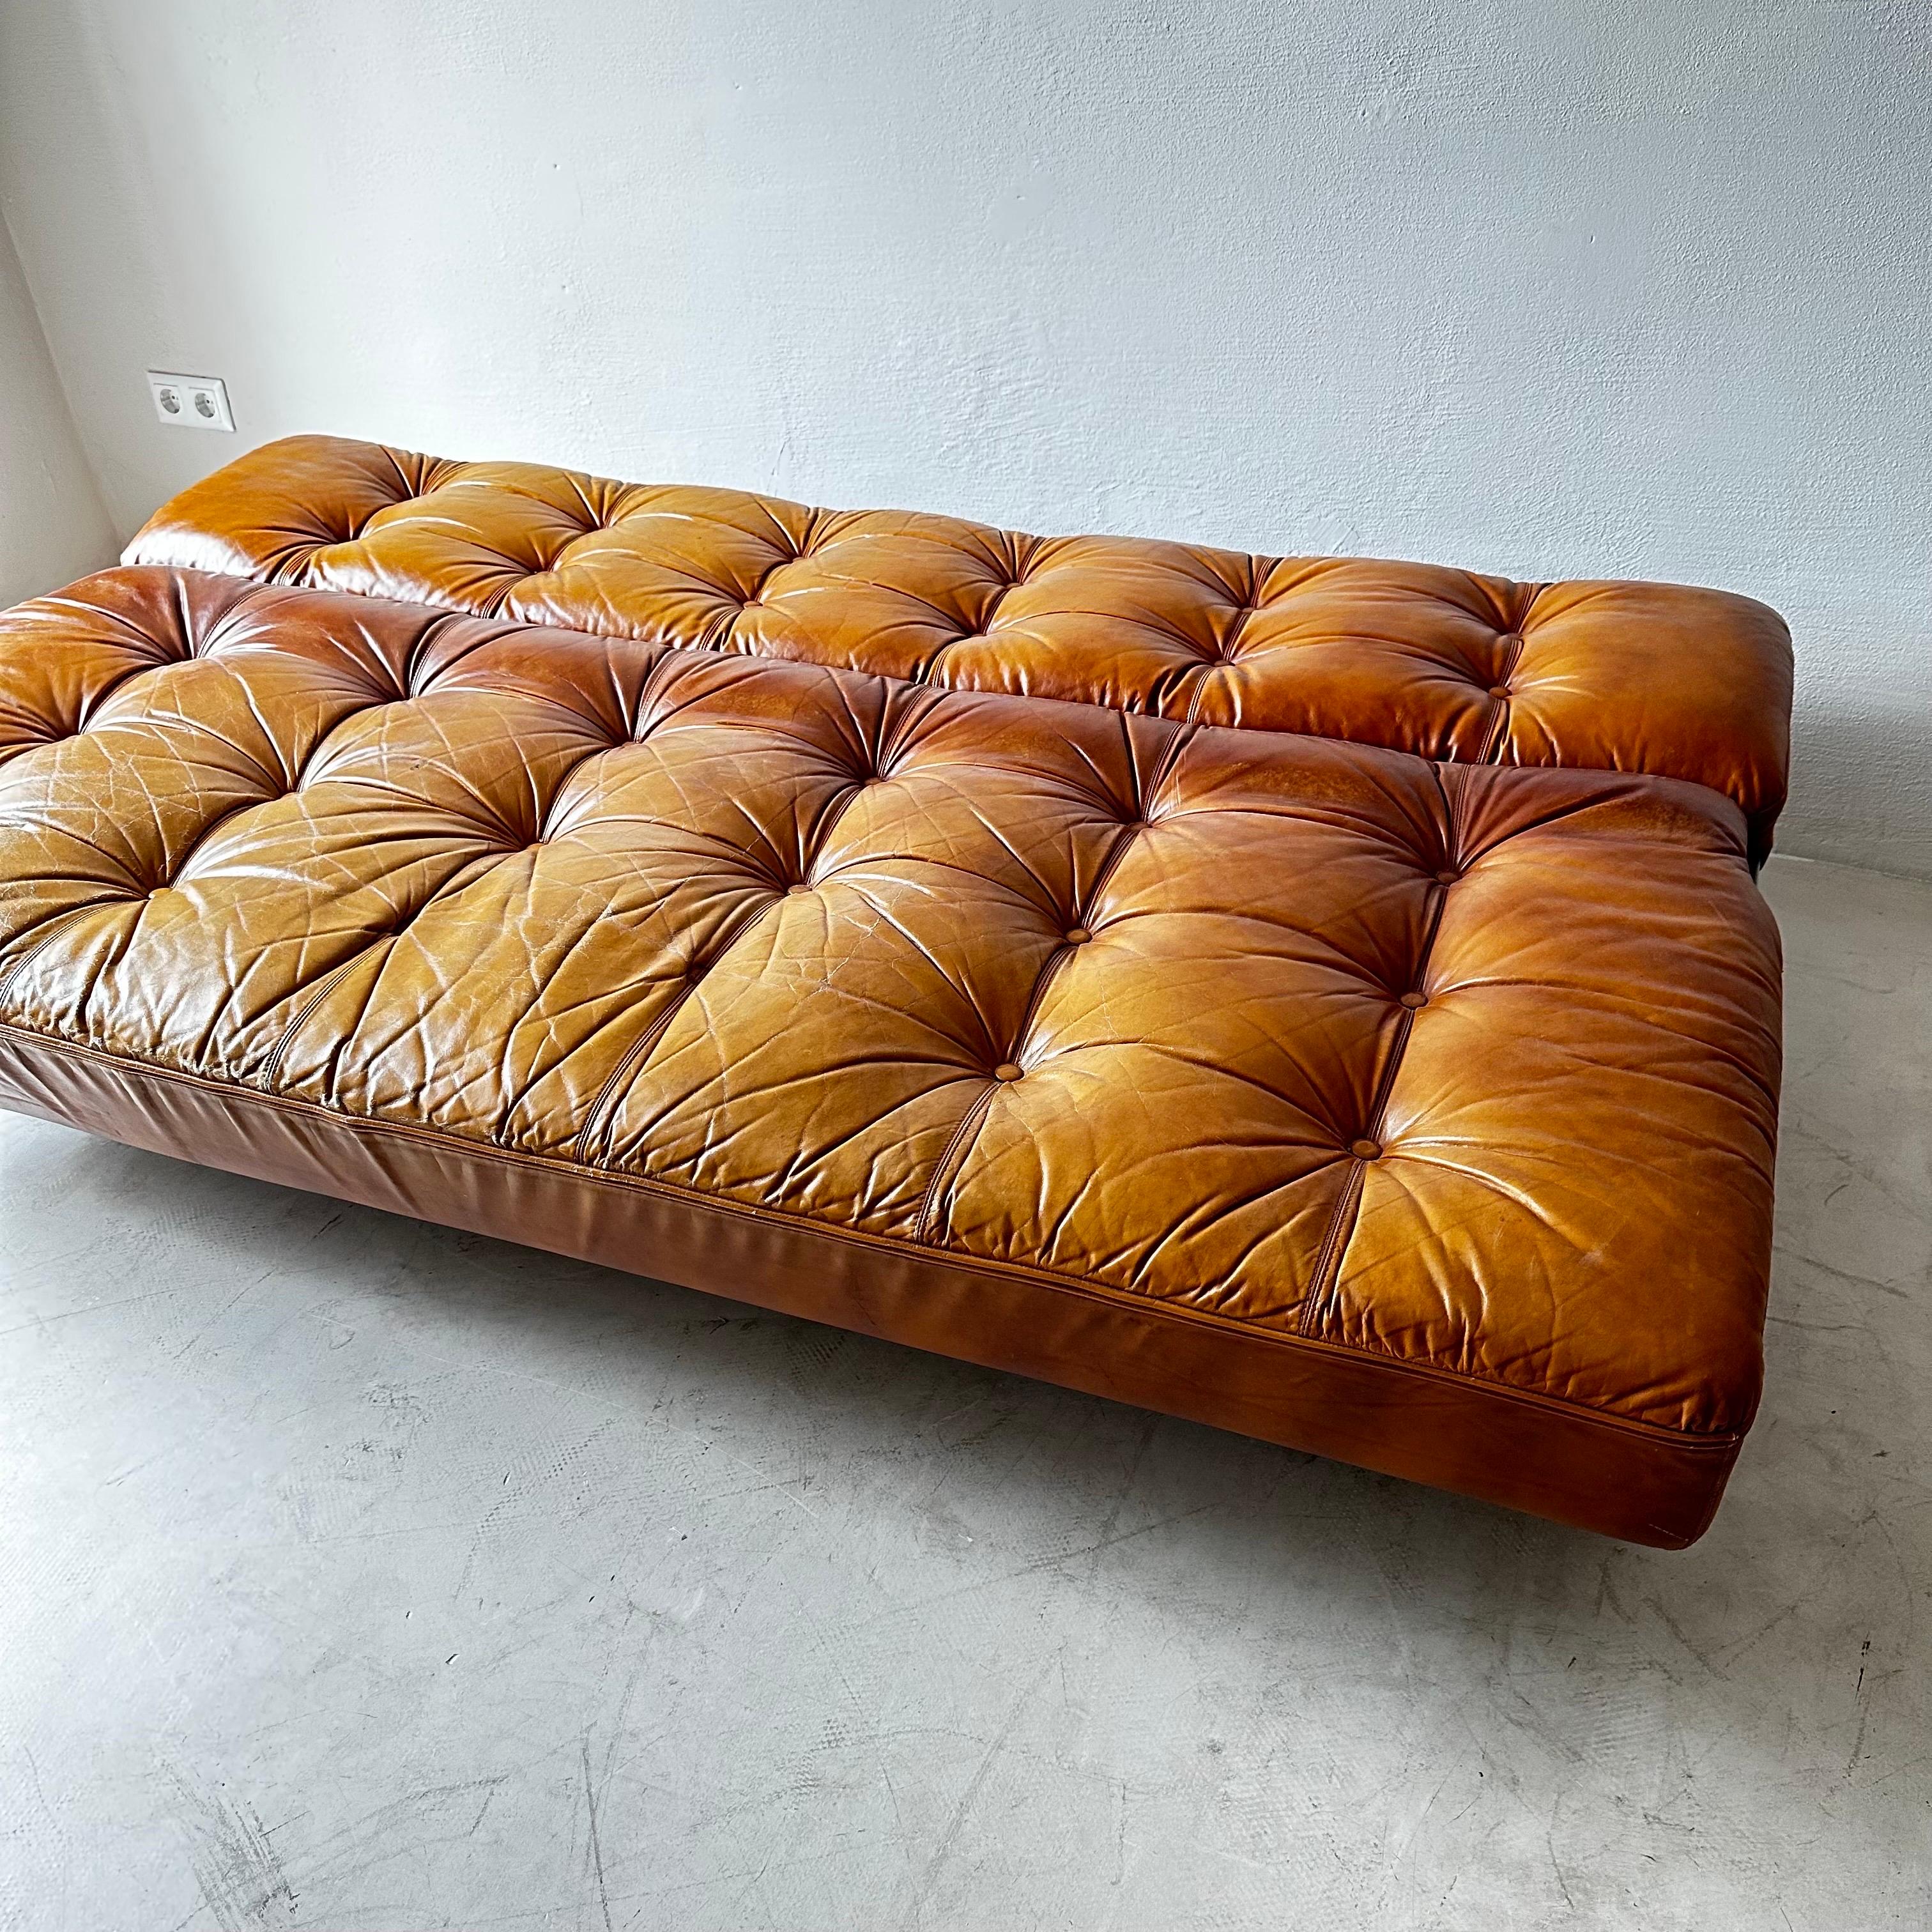 Johannes Spalt for Wittmann 'Constanze' Sofa in Cognac Leather For Sale 4